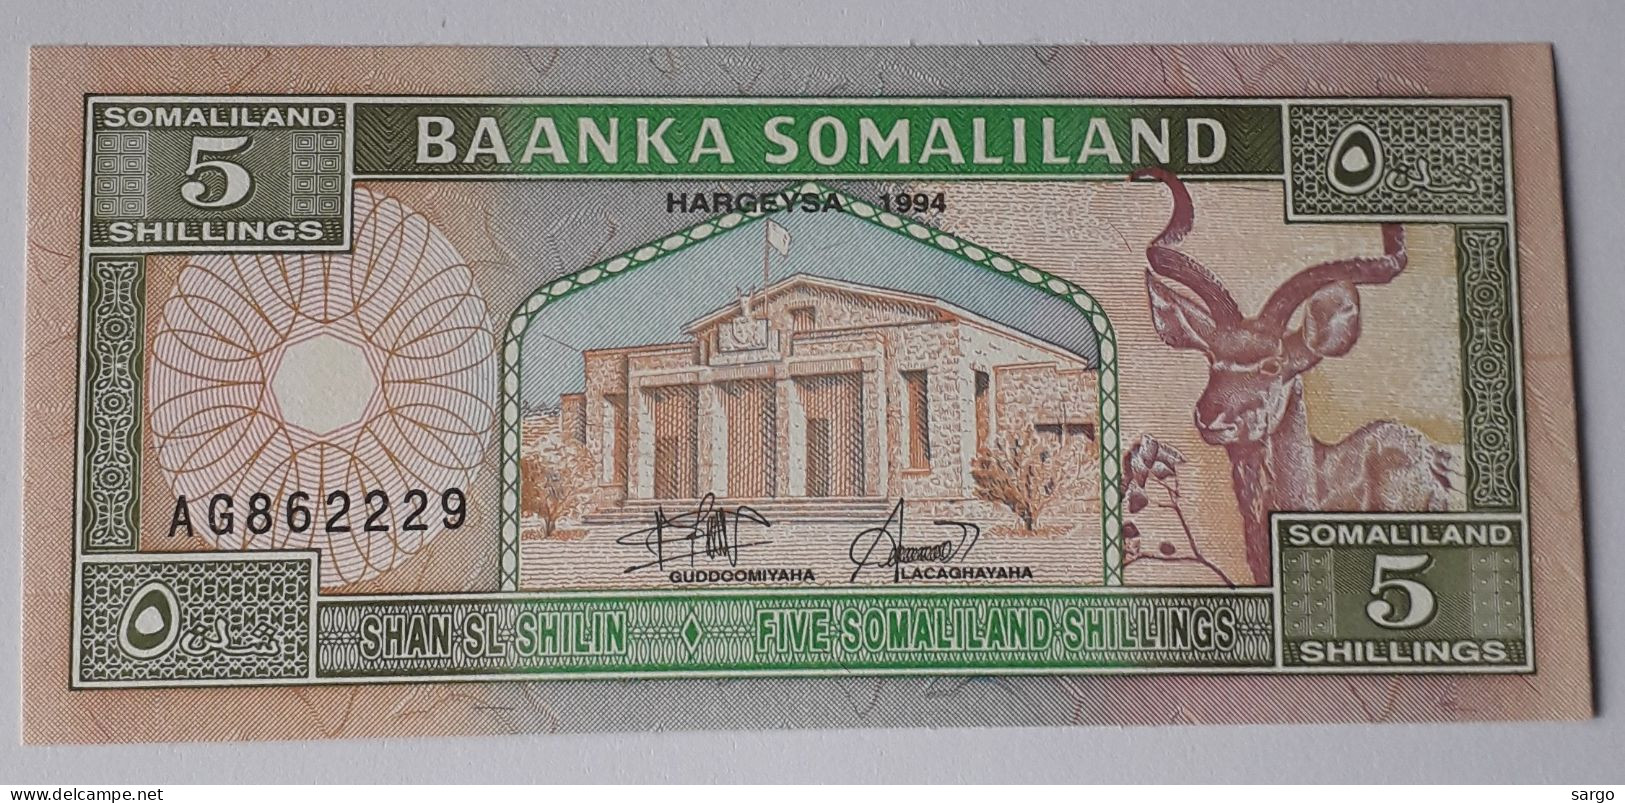 SOMALILAND - SOMALIA  - 5 SHILLINGS - P 1  (1994)  - UNC -  BANKNOTES - PAPER MONEY - CARTAMONETA - - Somalia